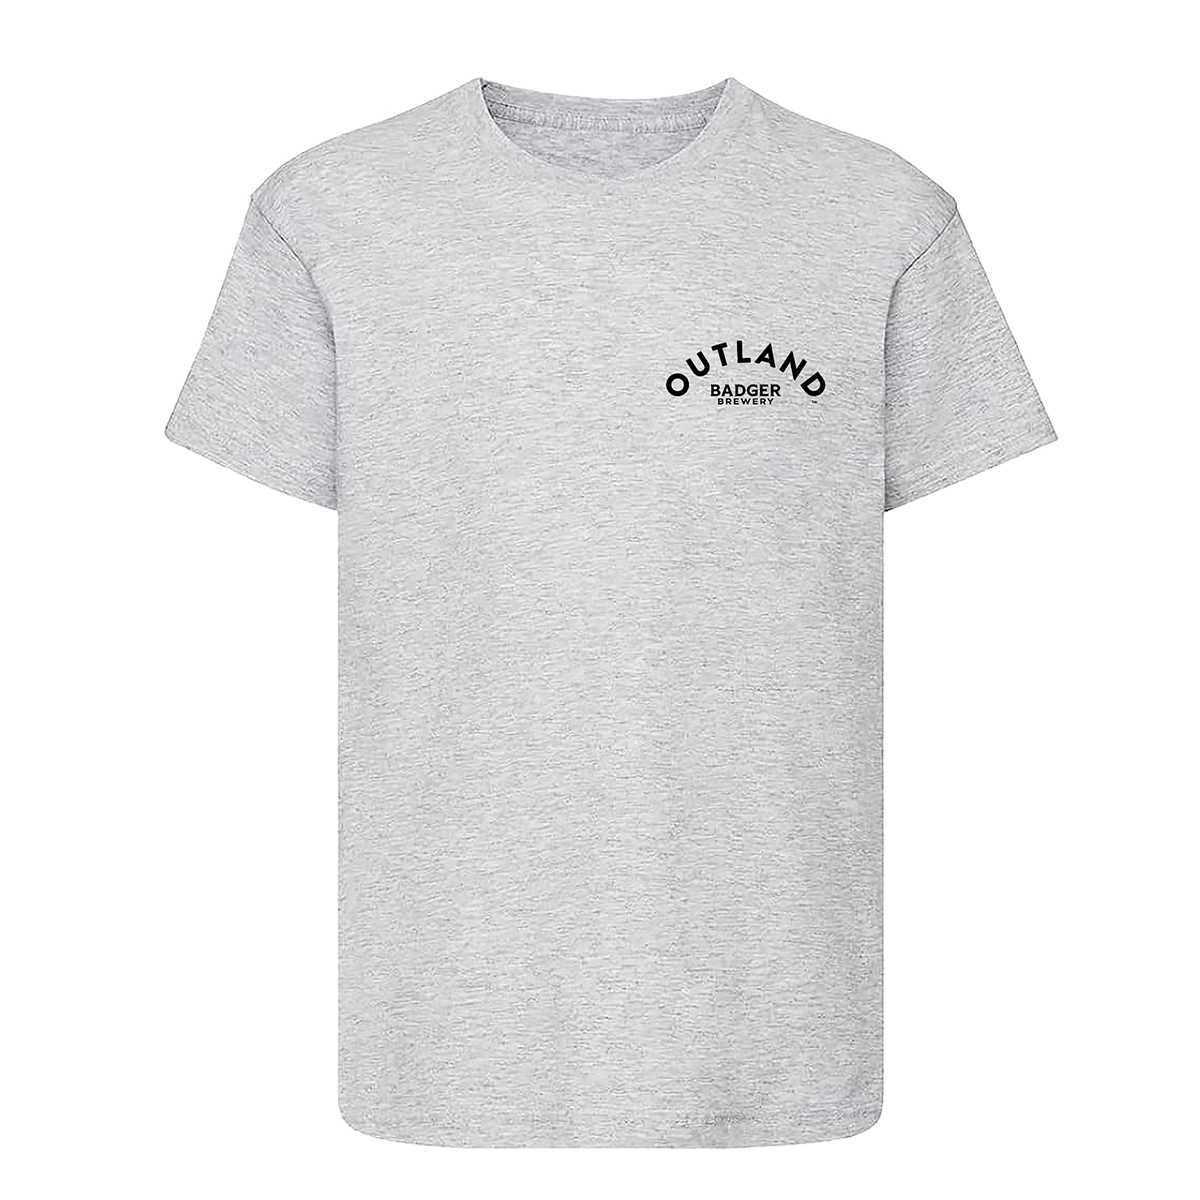 Outland Grey & Green Hazy IPA T-shirt